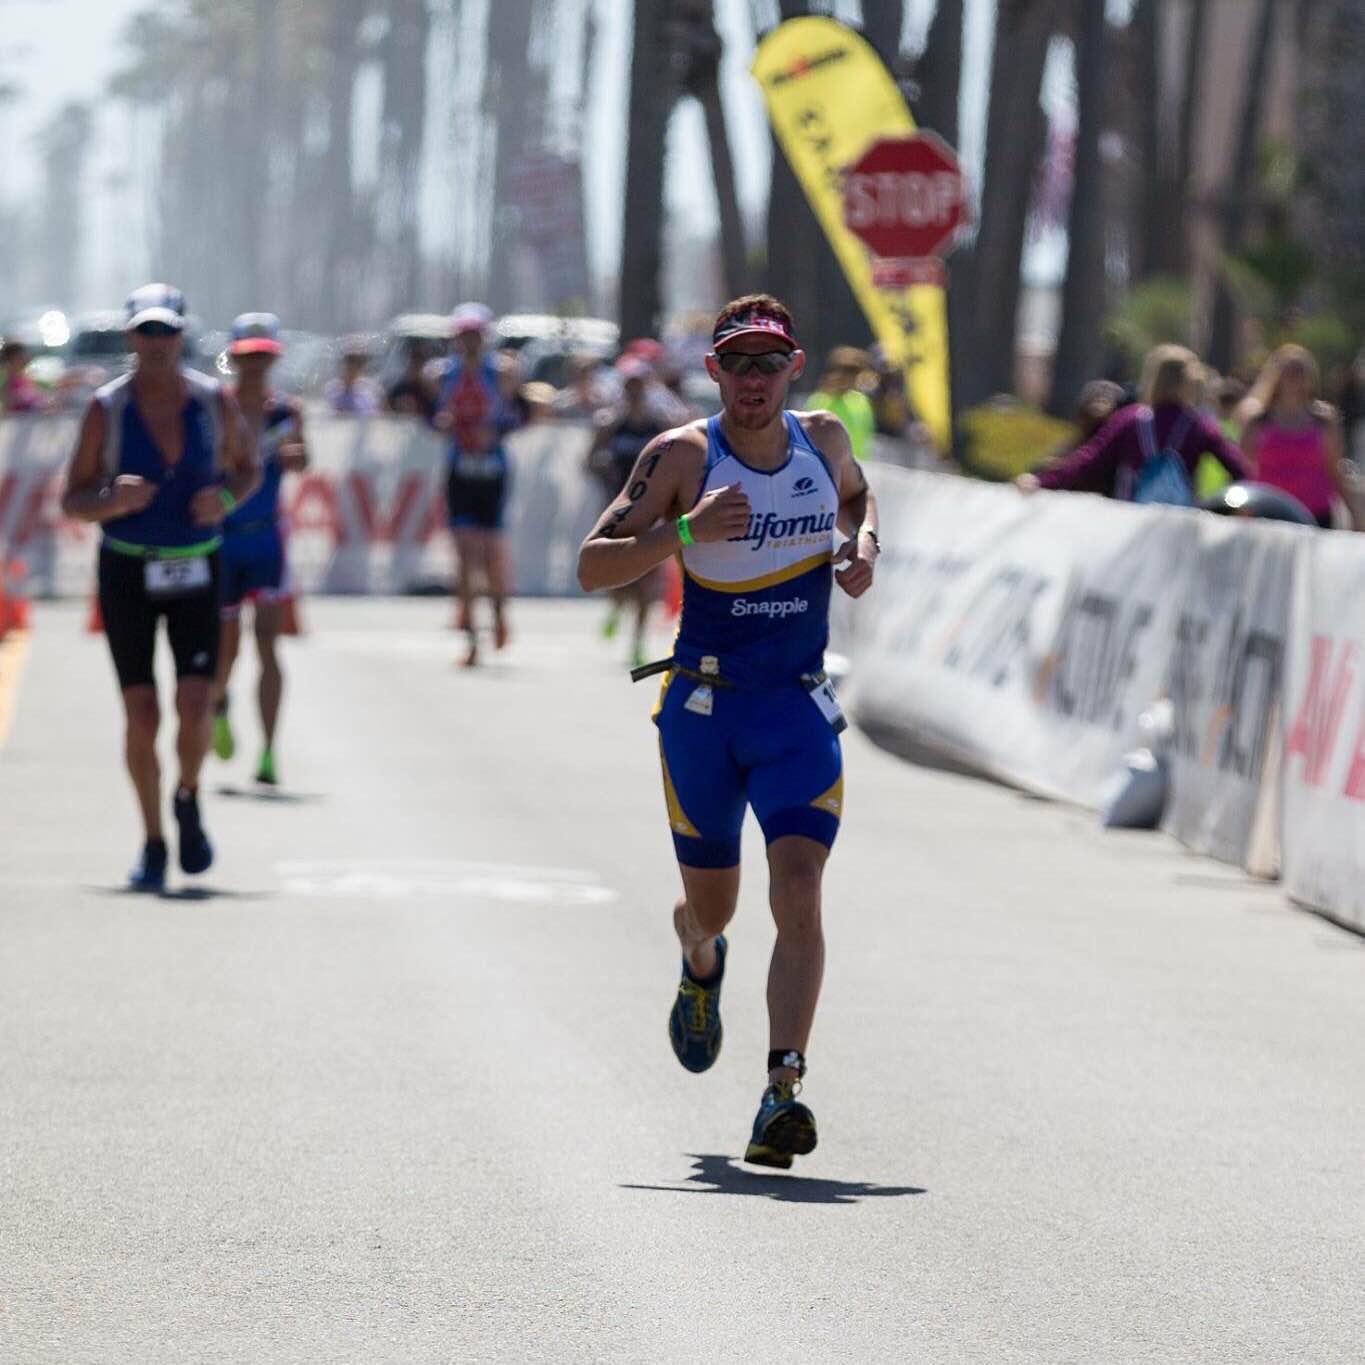 Jaime on the final leg, running in Ironman 70.3 California